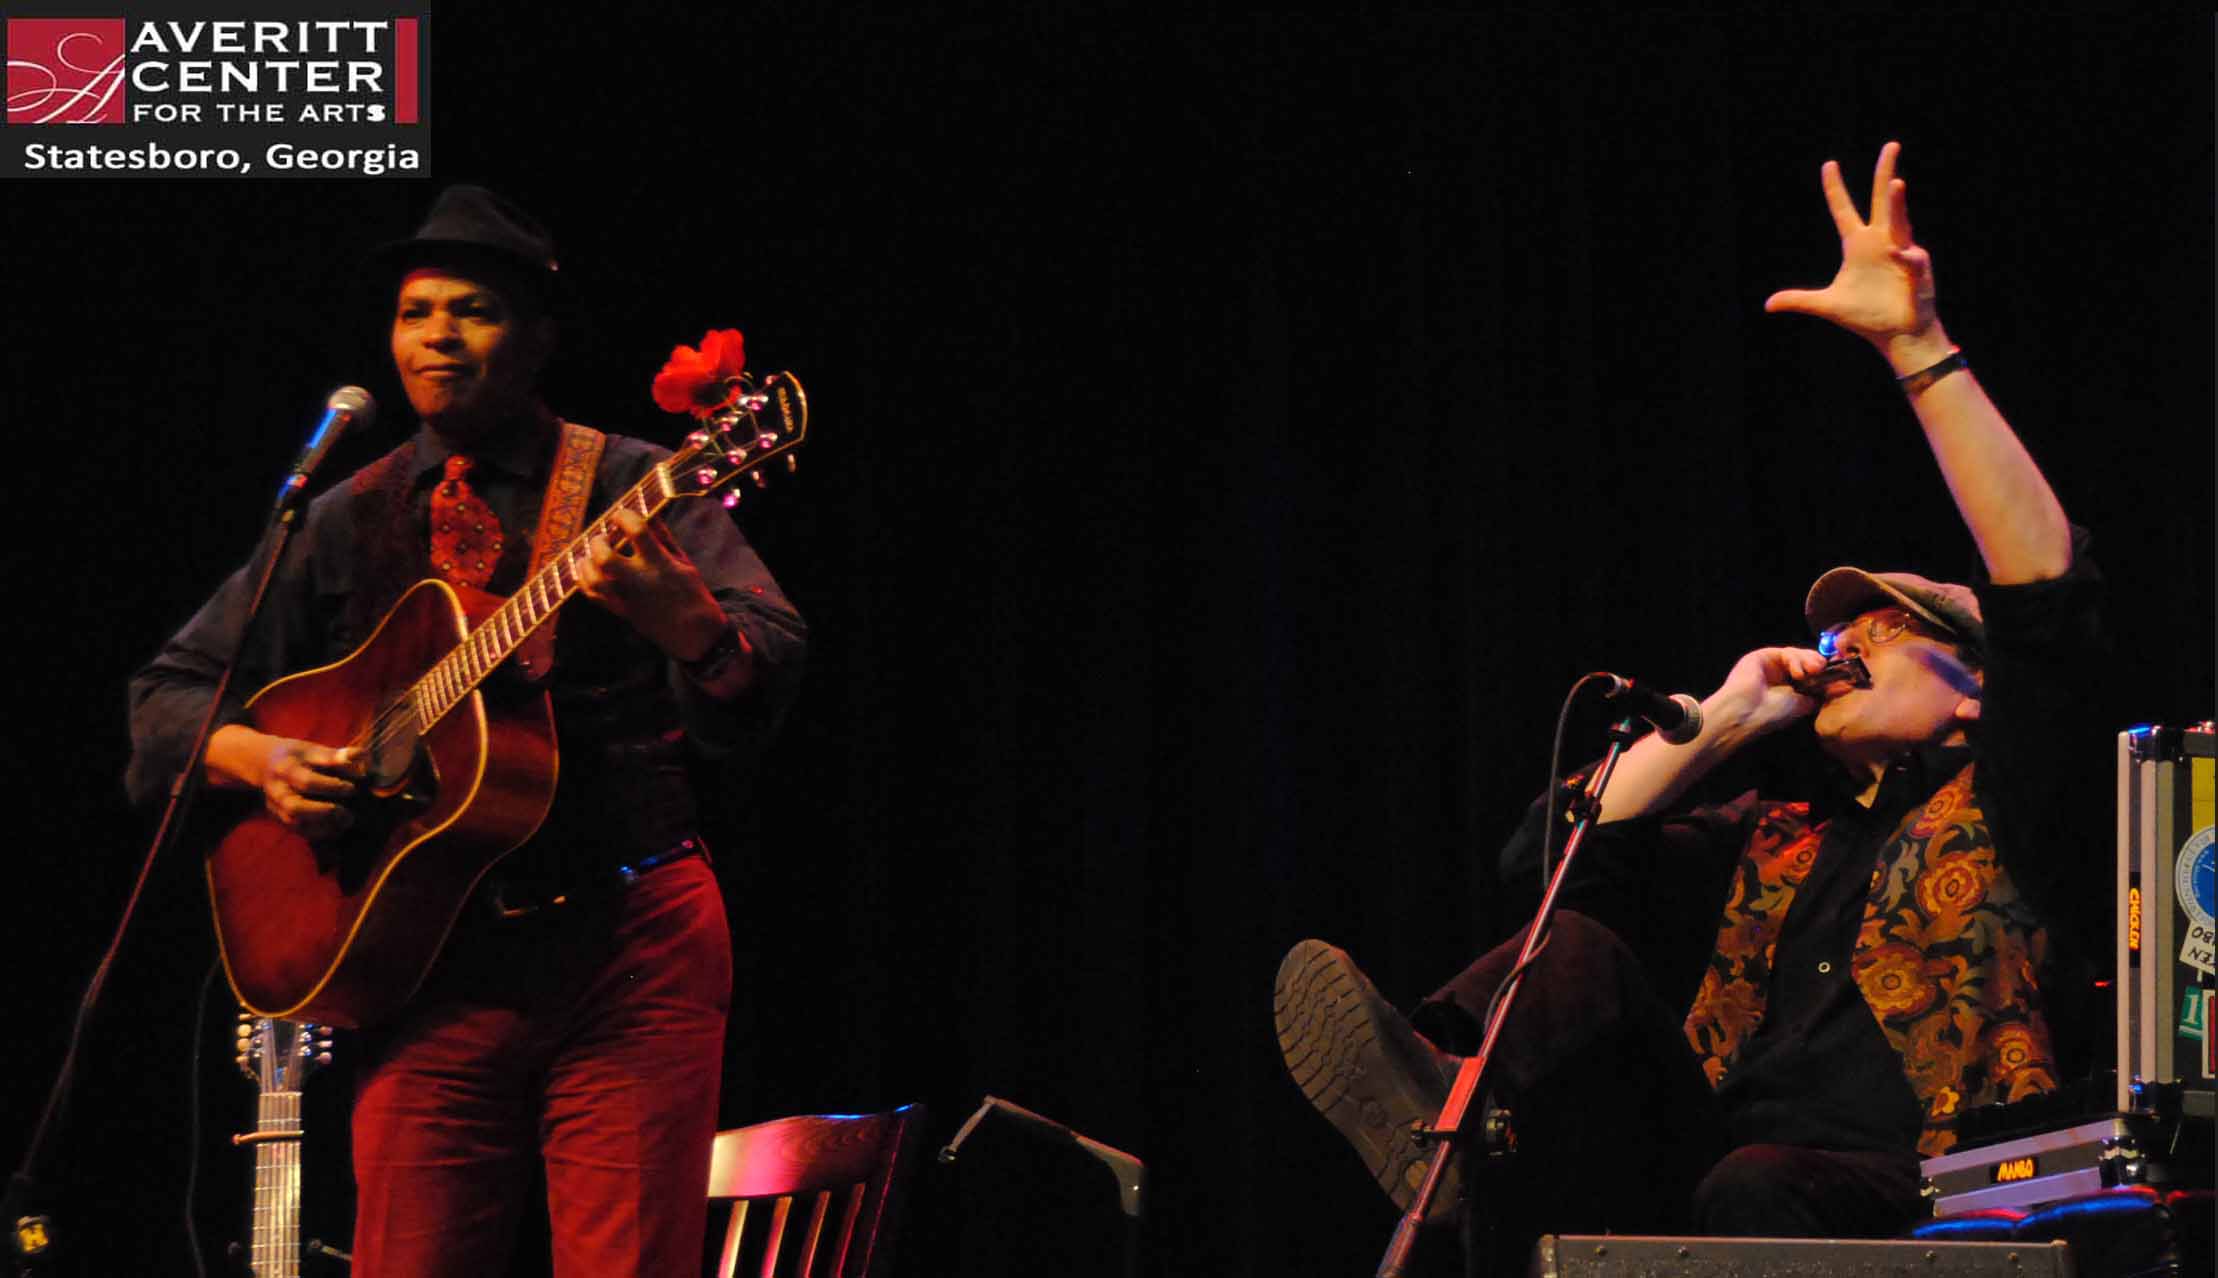 GUY DAVIS & FABRIZIO POGGI 2014 USA TOUR AVERITT CENTER ARTS Statesboro, Georgia